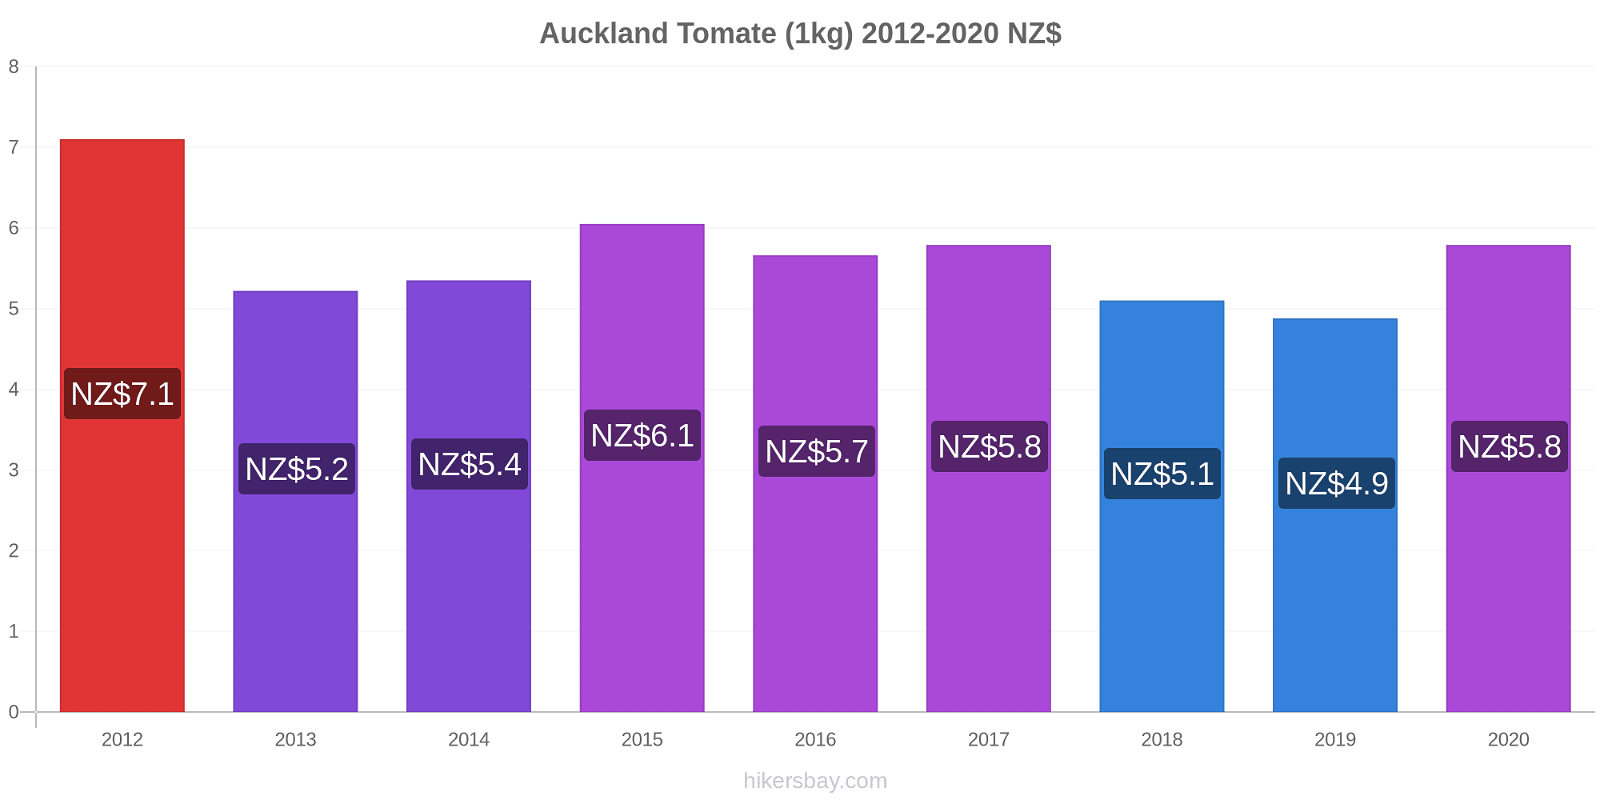 Auckland changements de prix Tomate (1kg) hikersbay.com